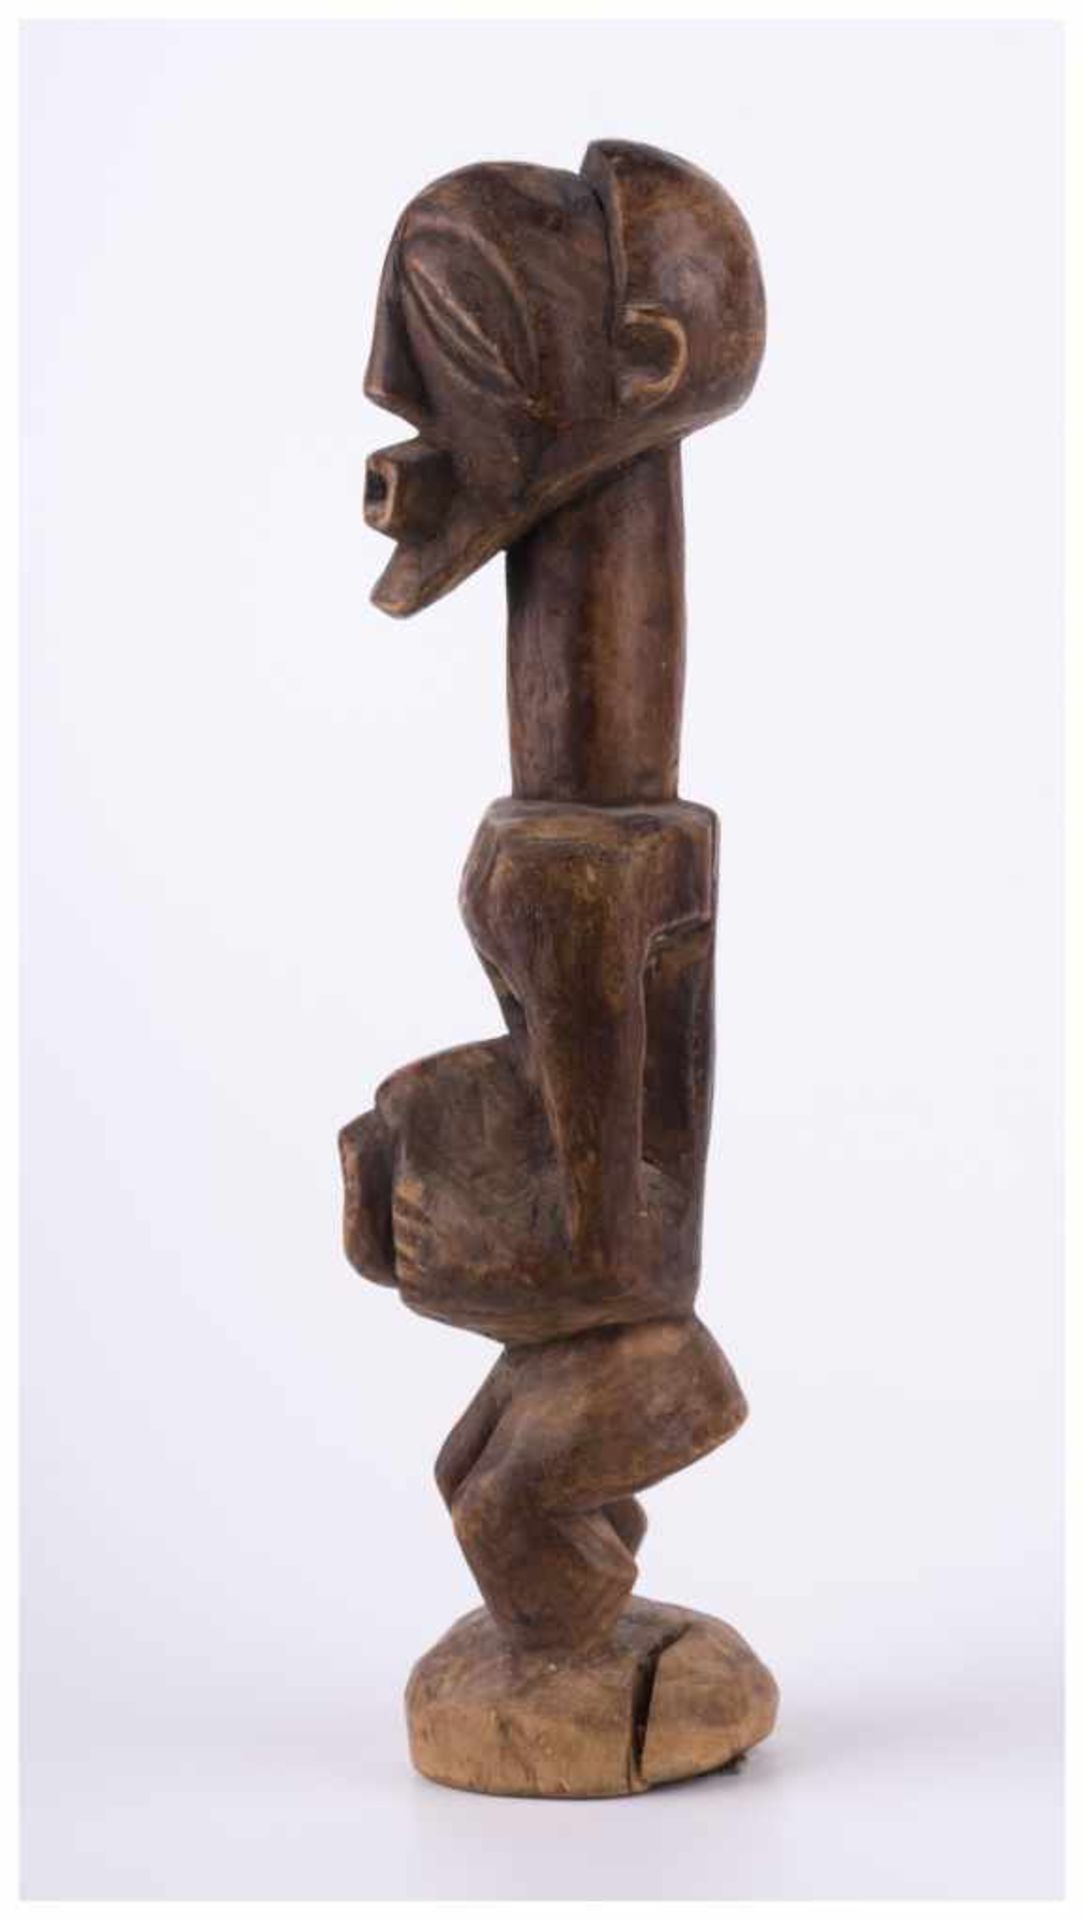 Fruchtbarkeits- Figur Afrika / Fertility figure, Africa - Holz, H: 29,5 cm - [...] - Image 8 of 8